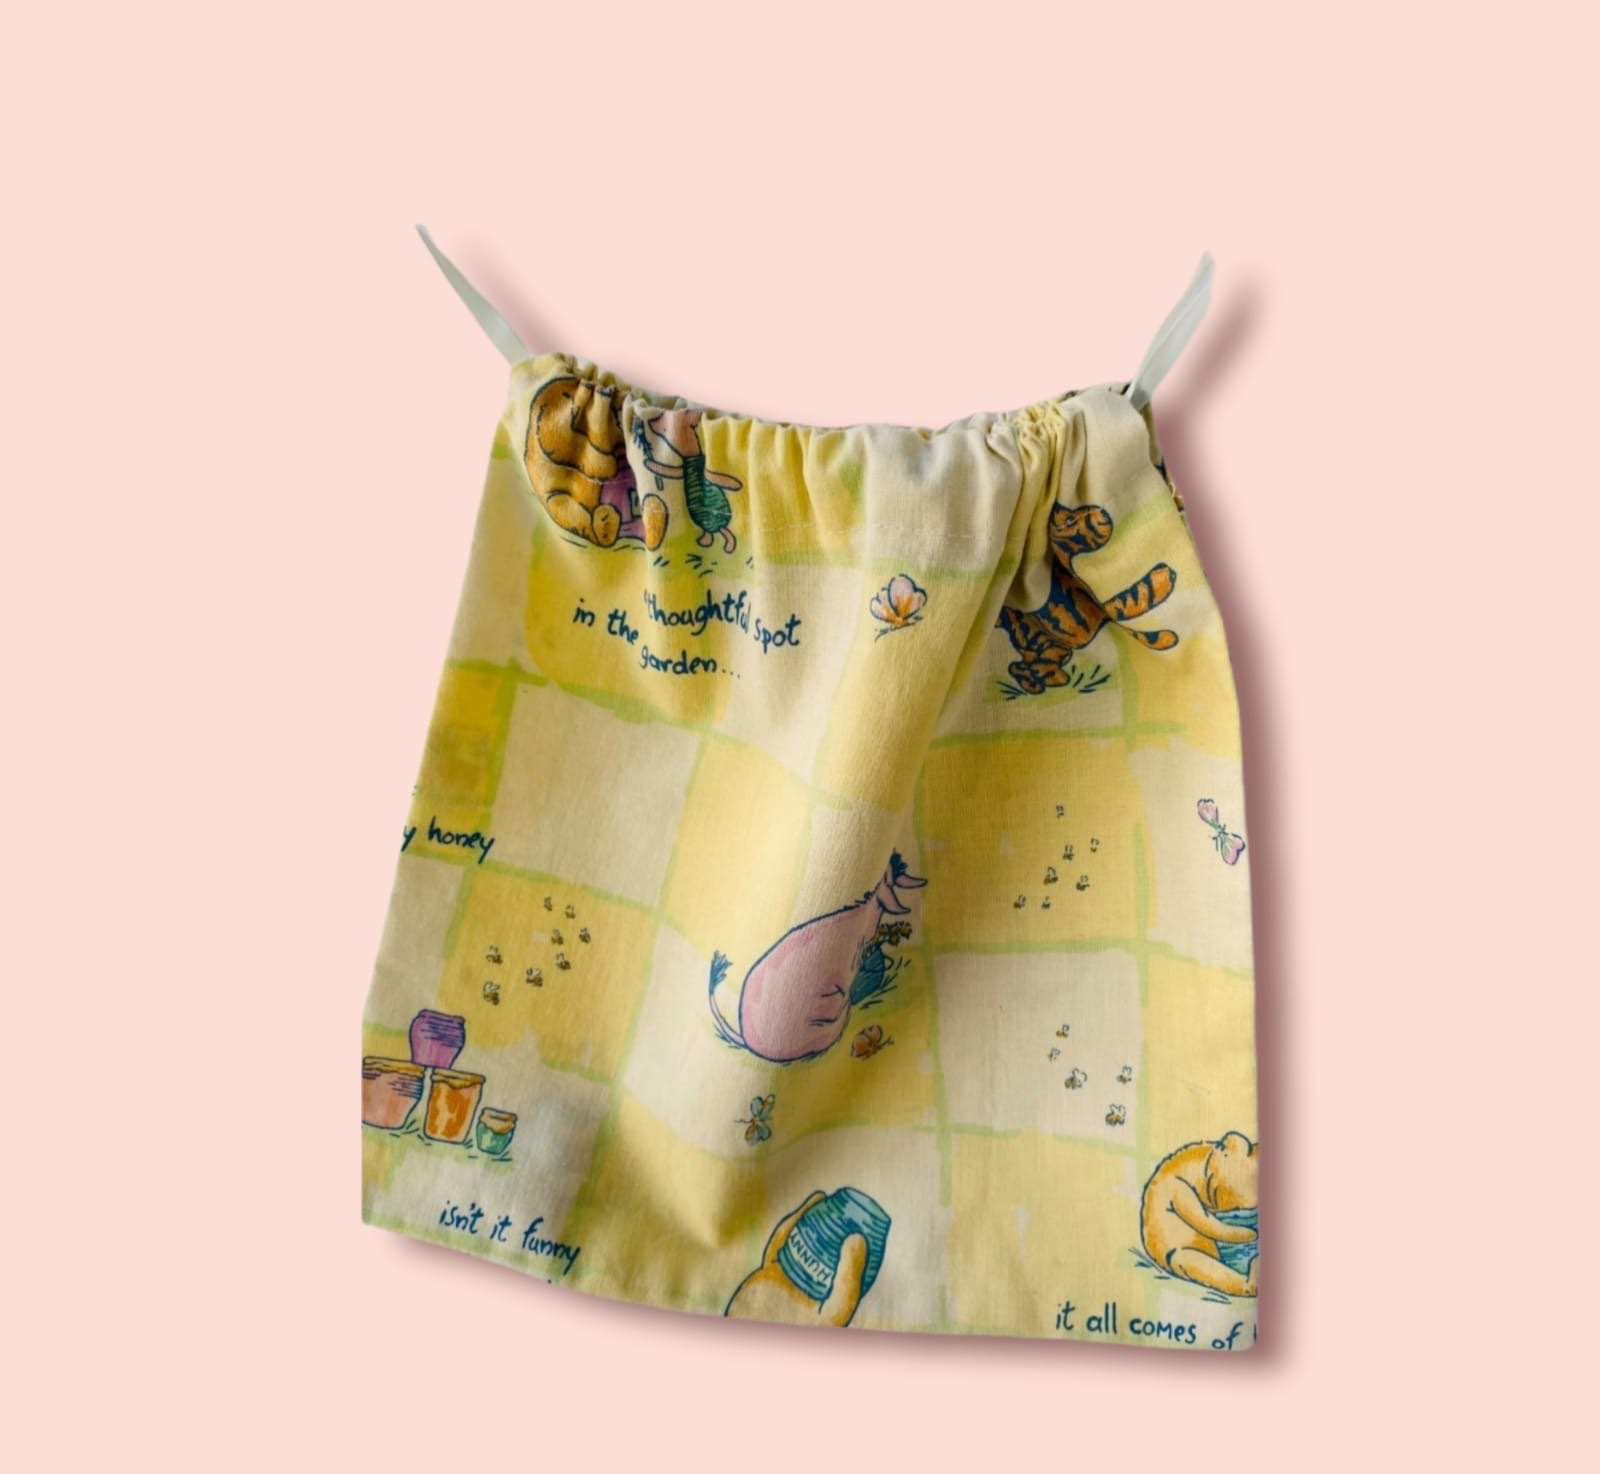 Winnie the Pooh_String bag - $7.00